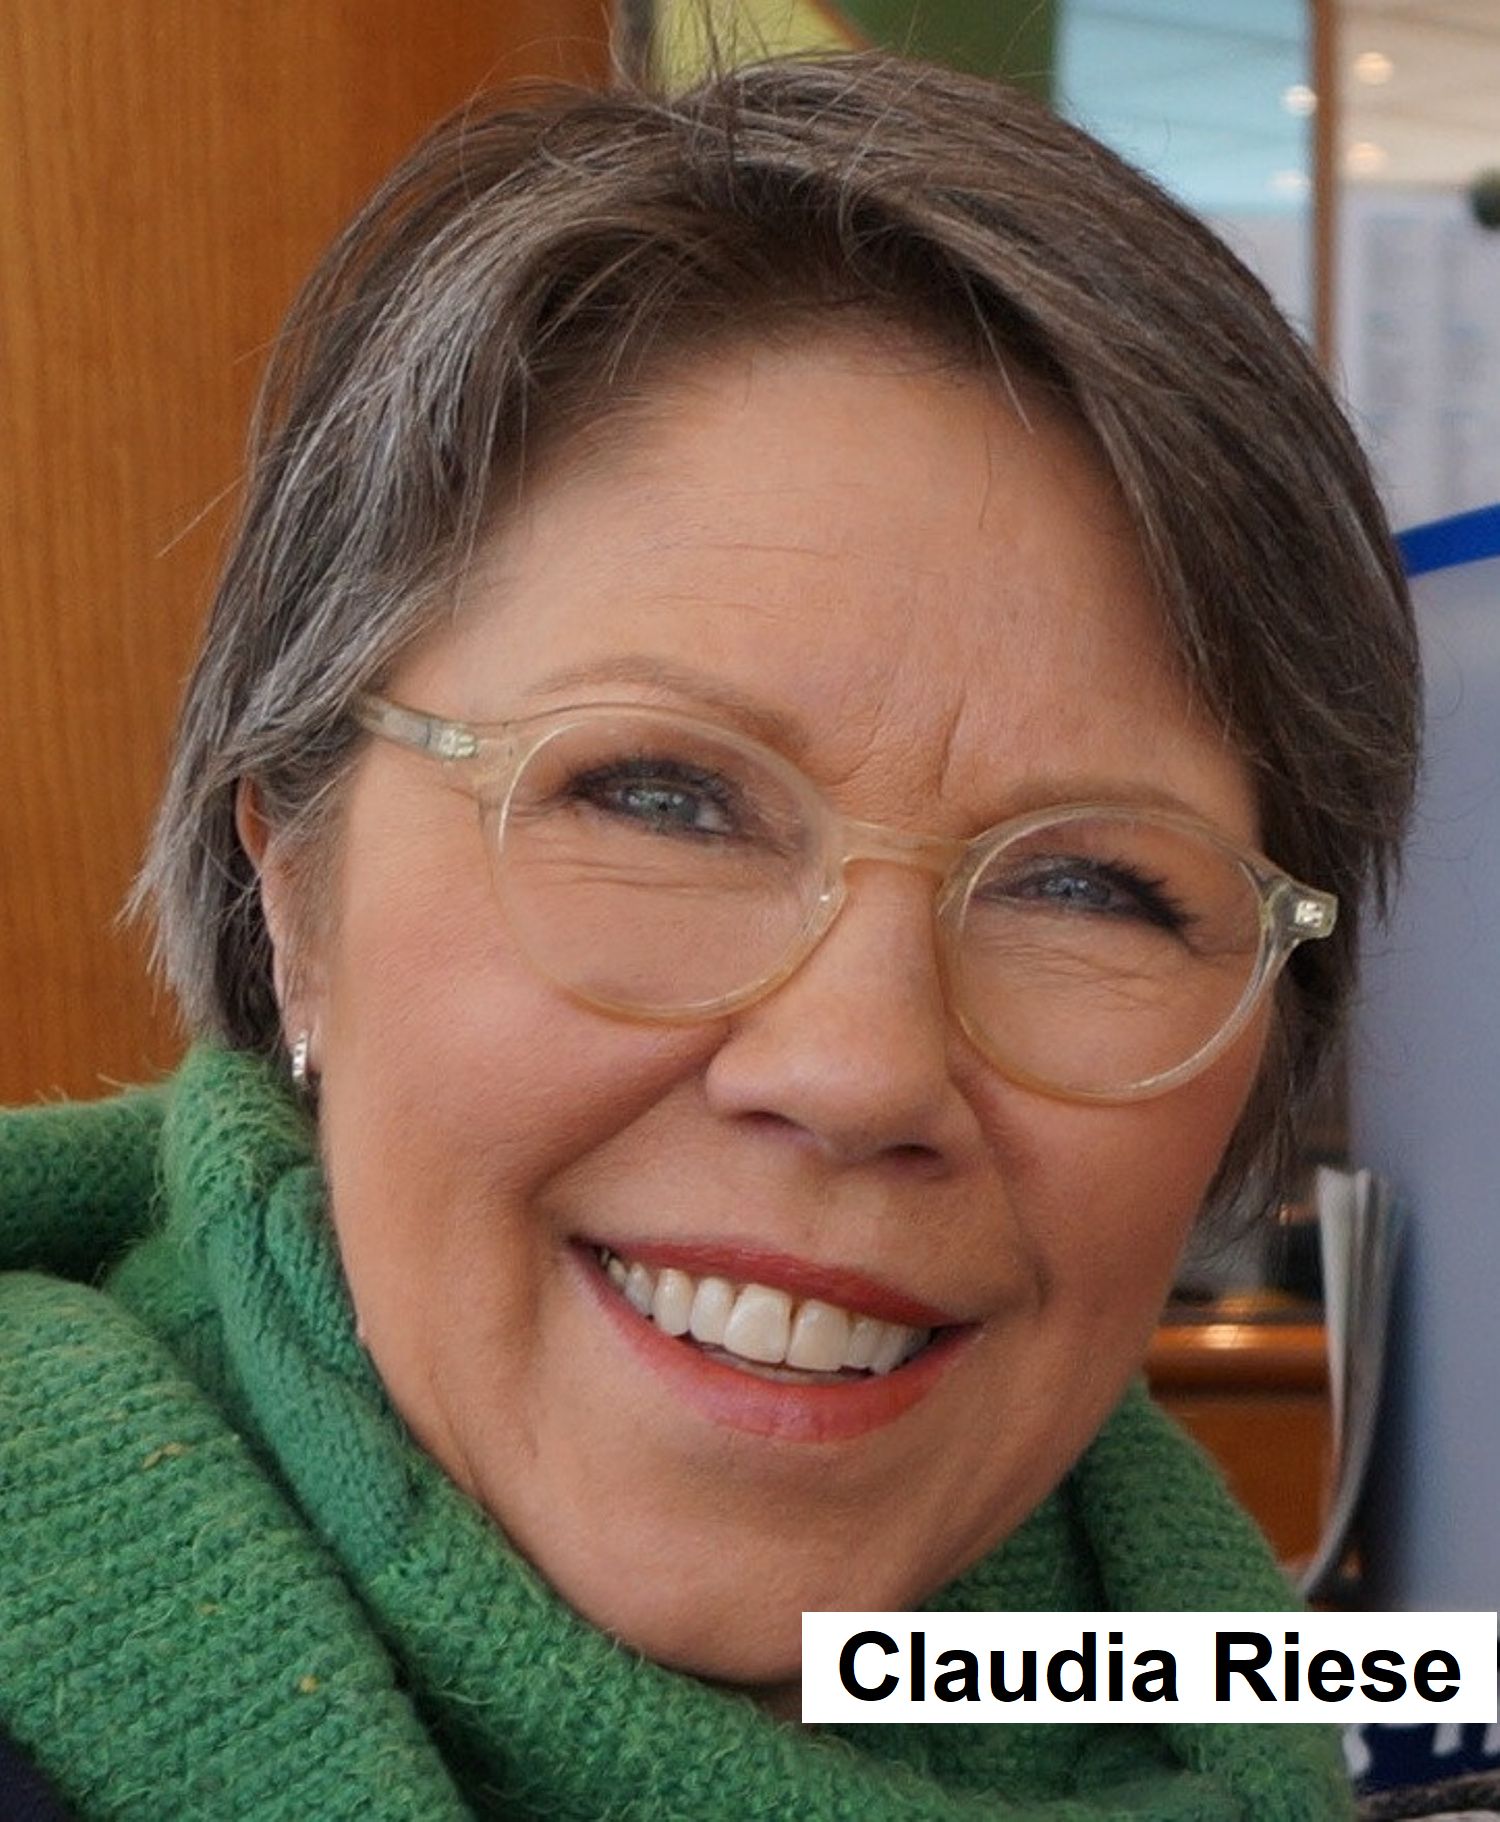 Claudia Riese